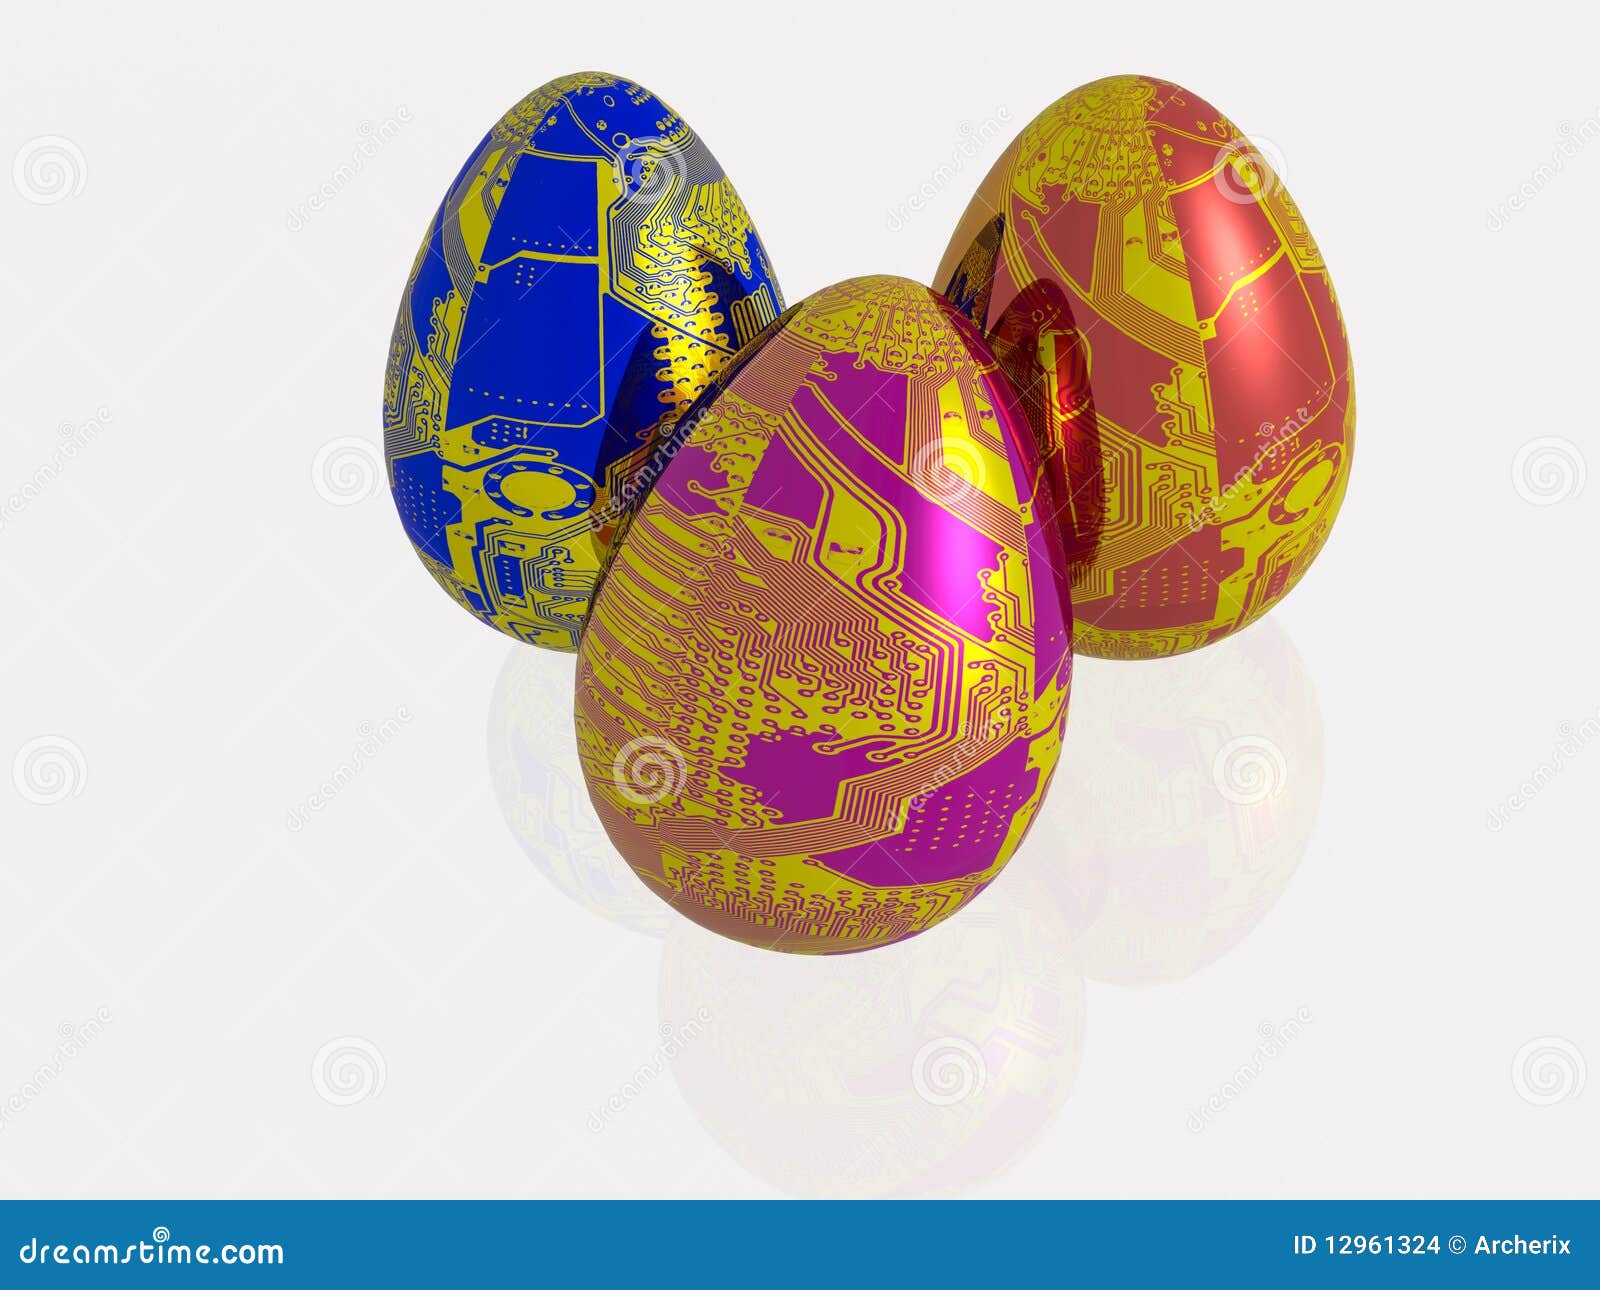 Electronic eggs stock illustration. Illustration of closeup - 12961324